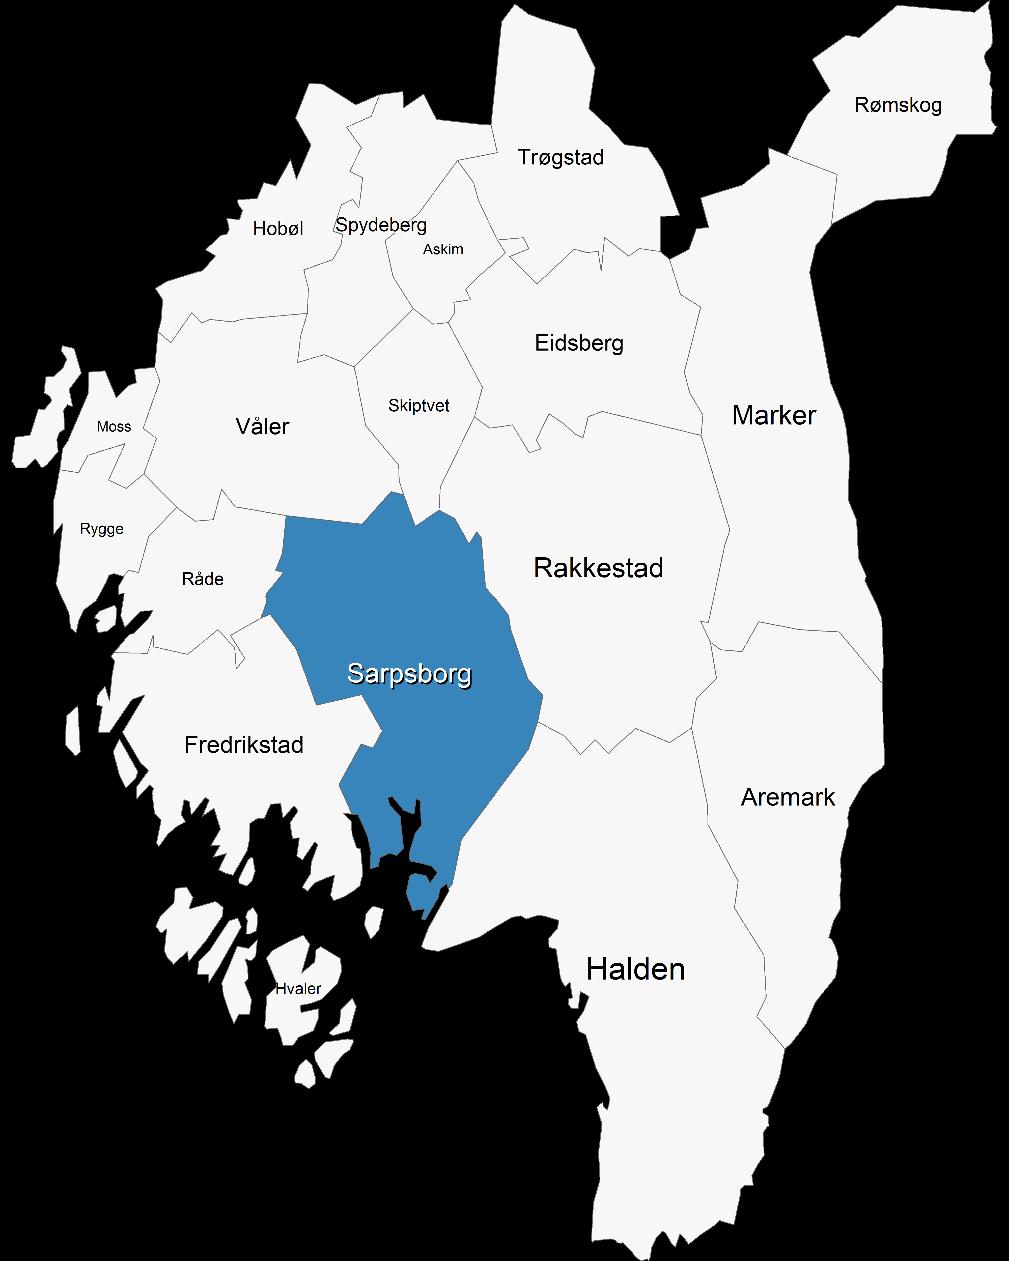 Regional analyse for Sarpsborg 2016